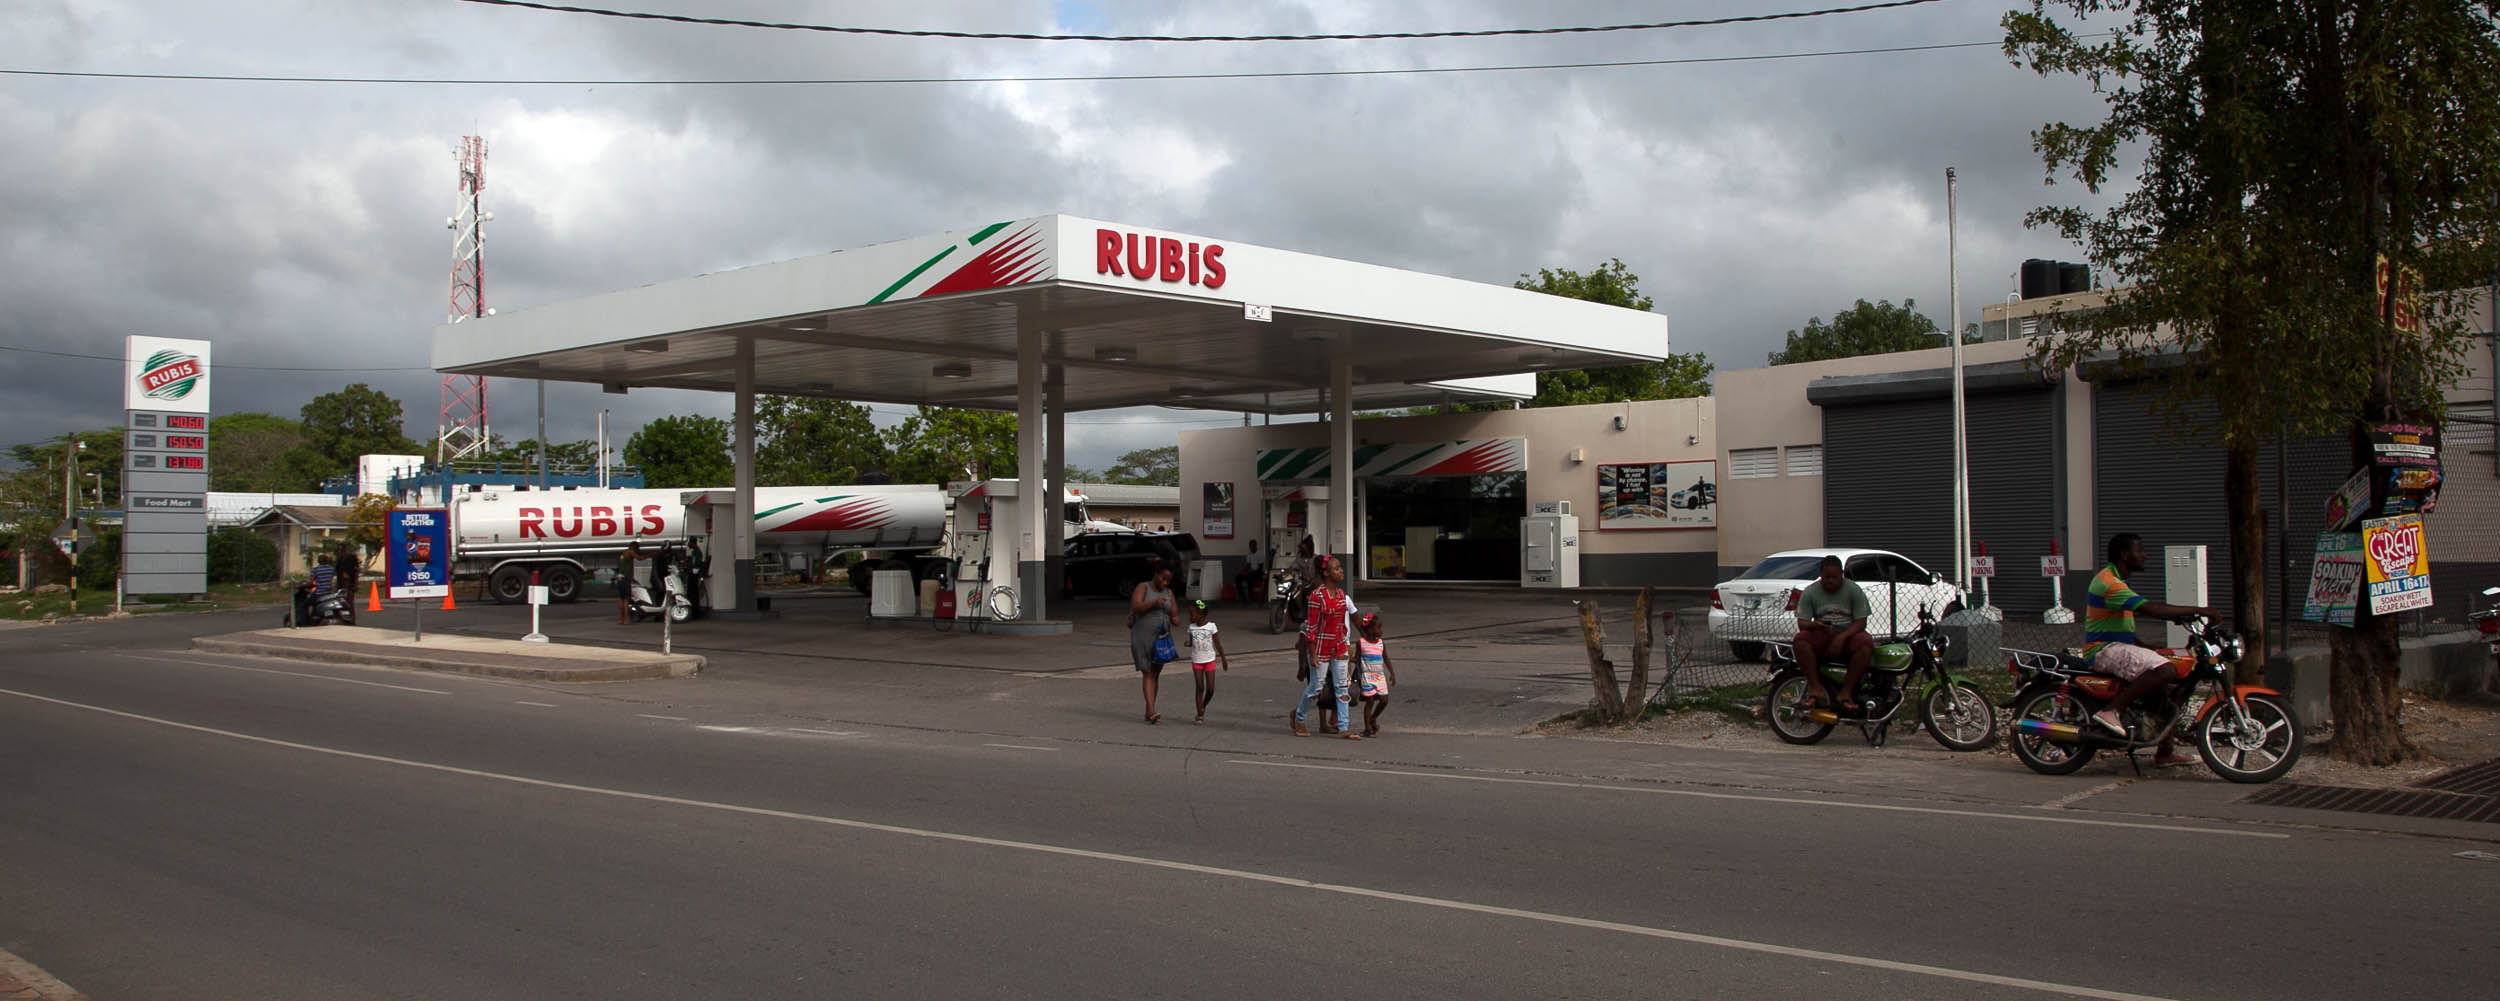 Rubis Station - Nonpareil Road - Negril Jamaica